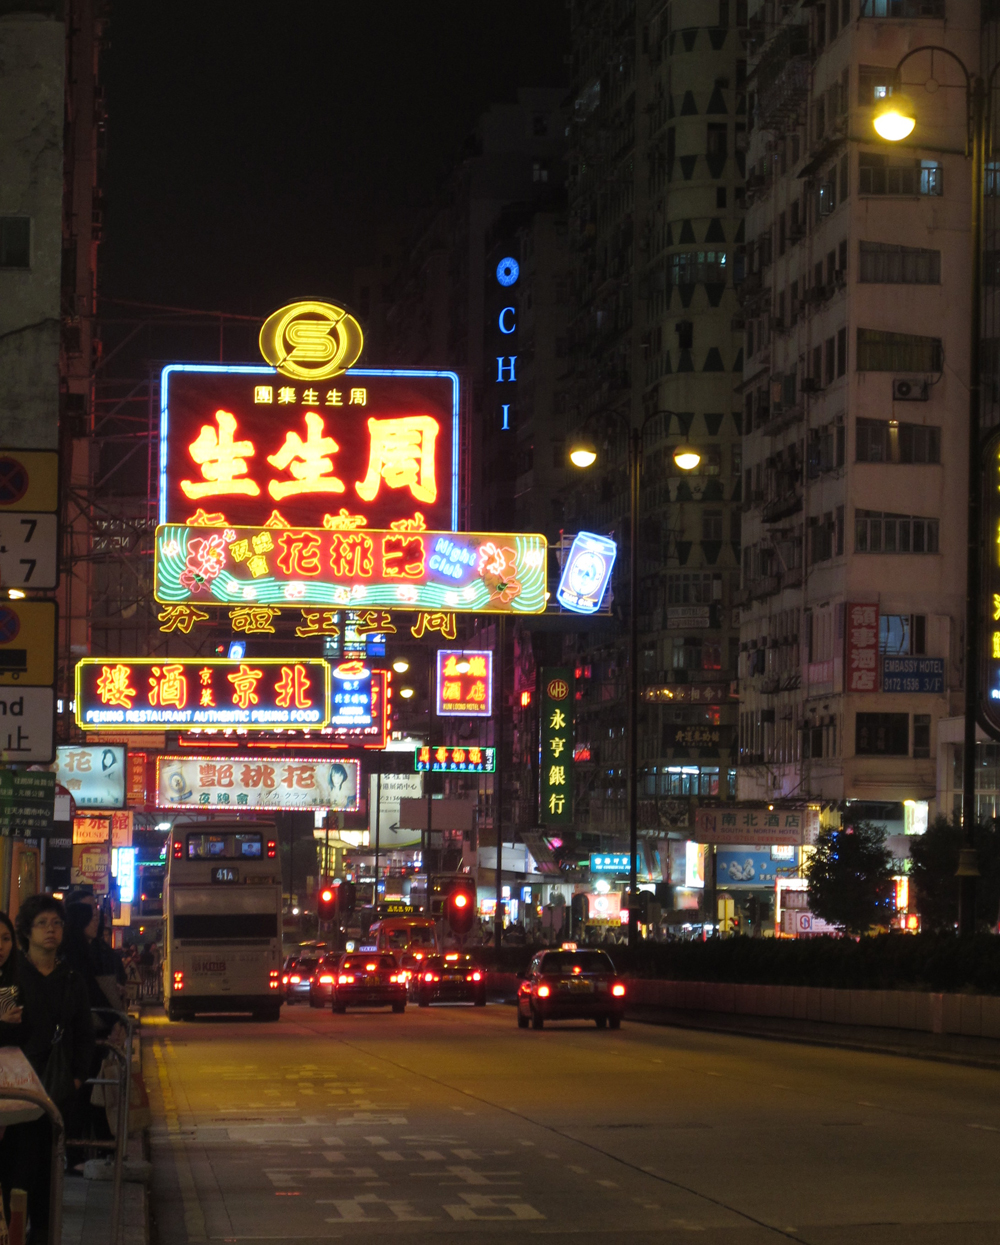 Kowloon nighttime street signs